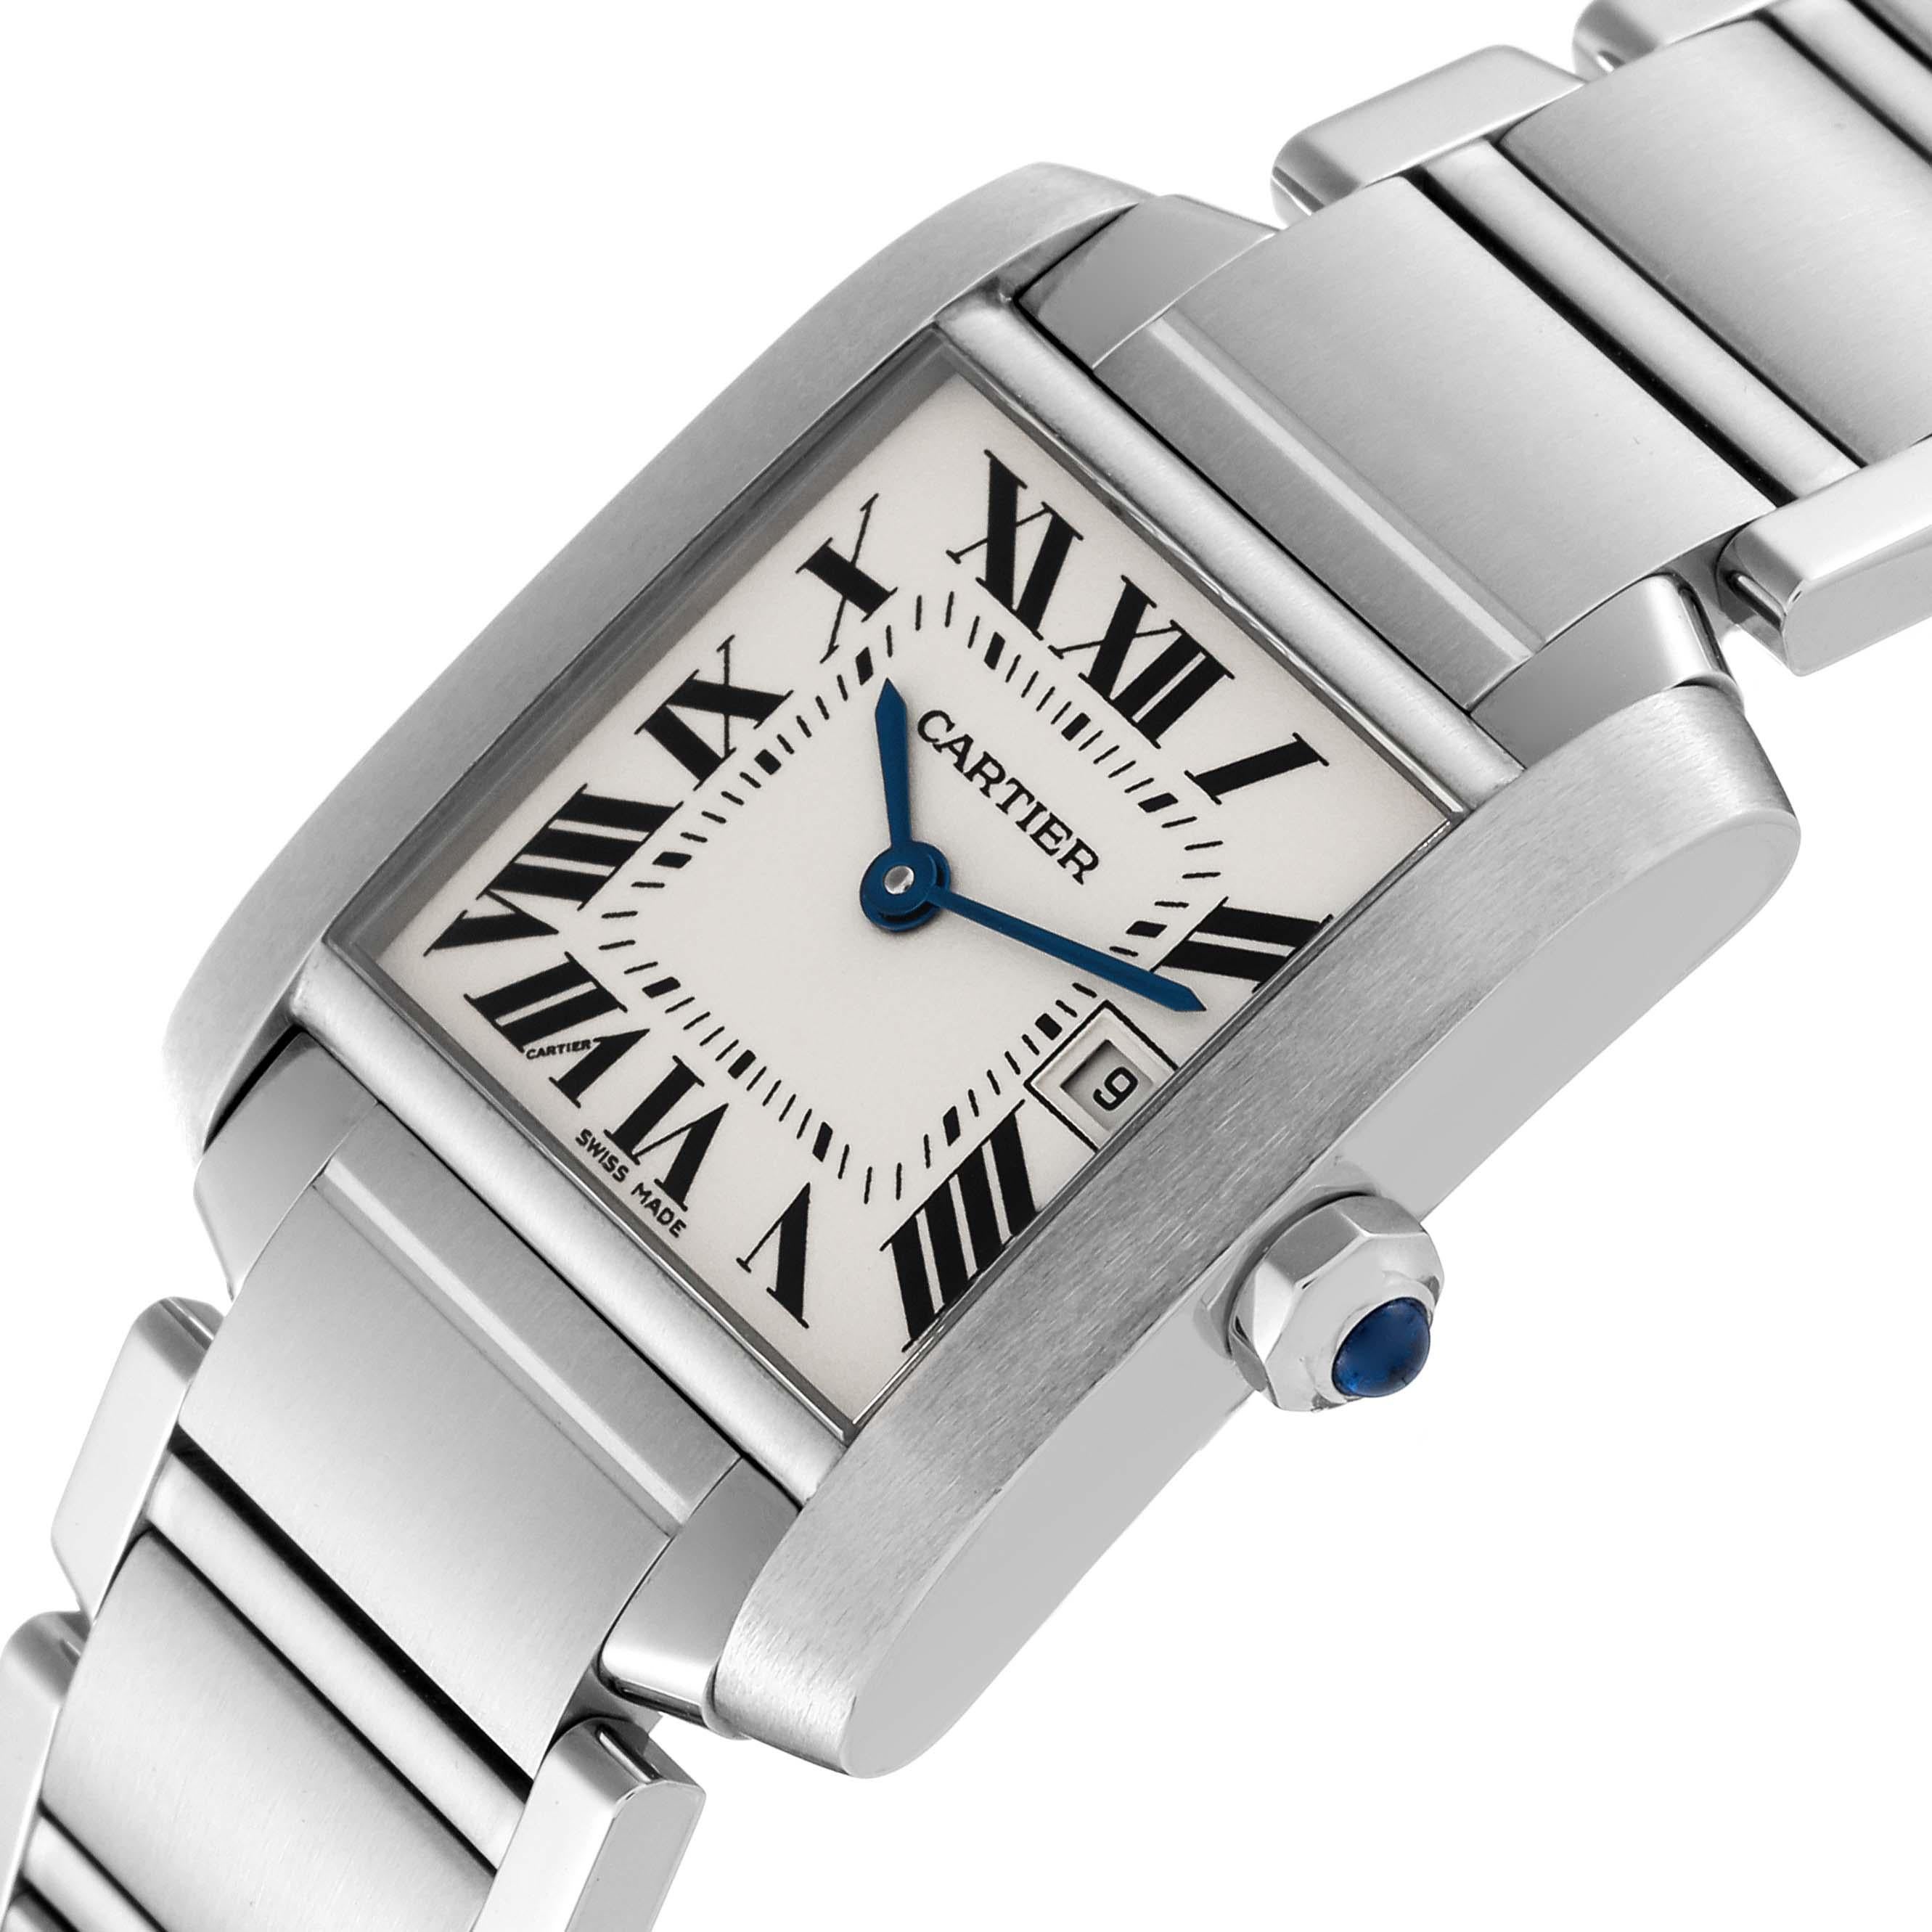 Cartier Tank Francaise Midsize Silver Dial Steel Ladies Watch W51011Q3 1